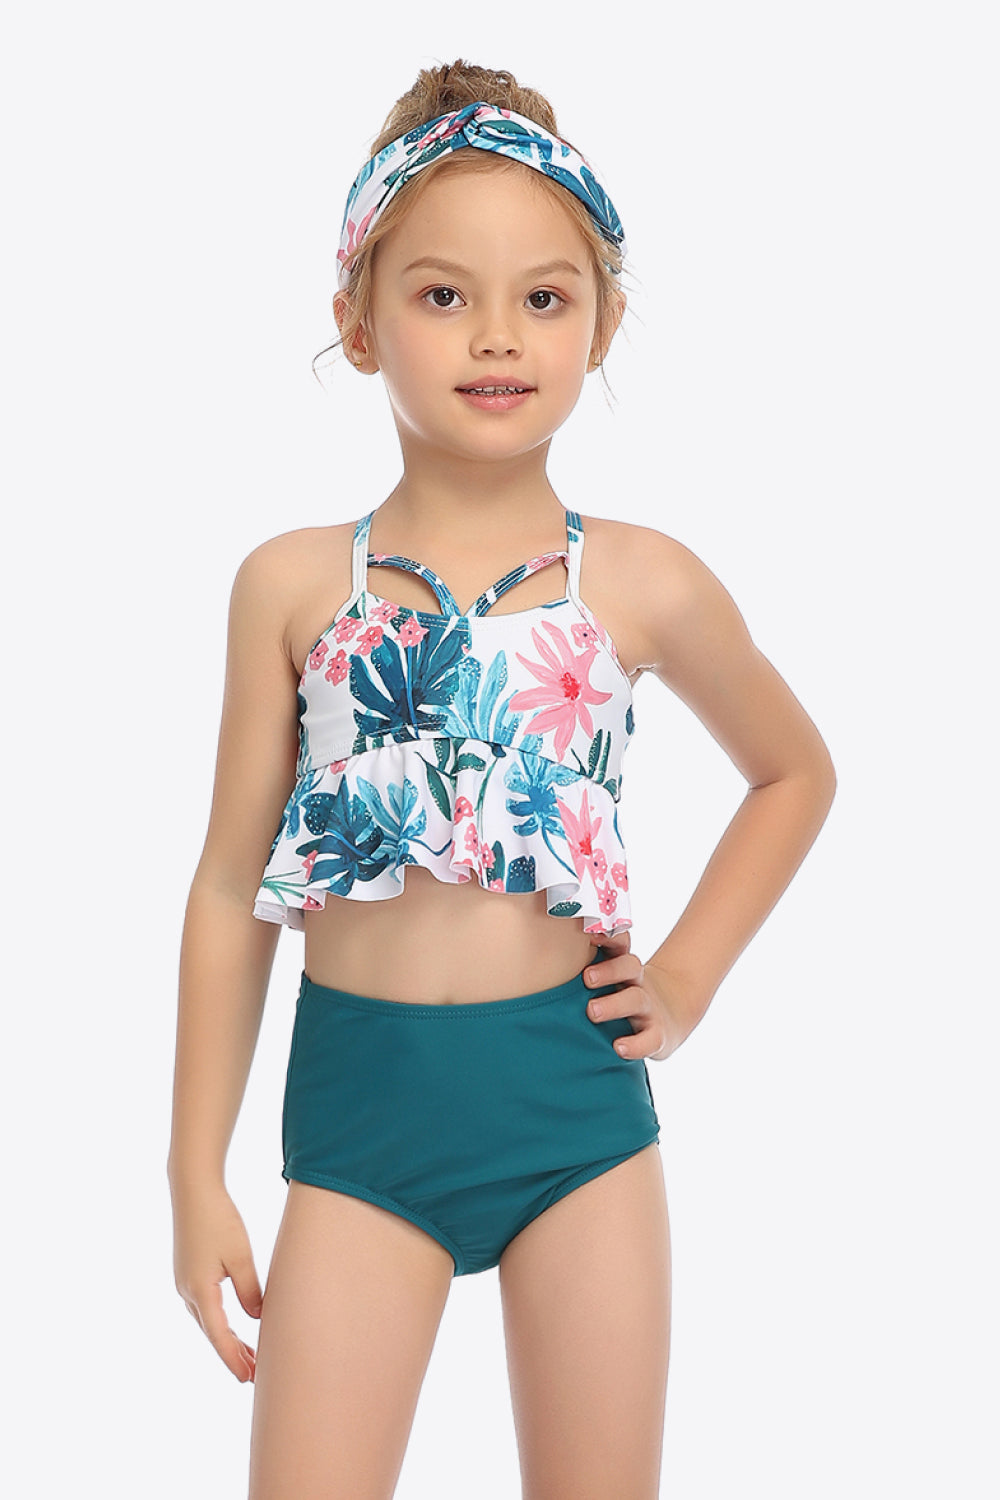 dixie clifton recommends Little Miss Sunshine Swimsuit